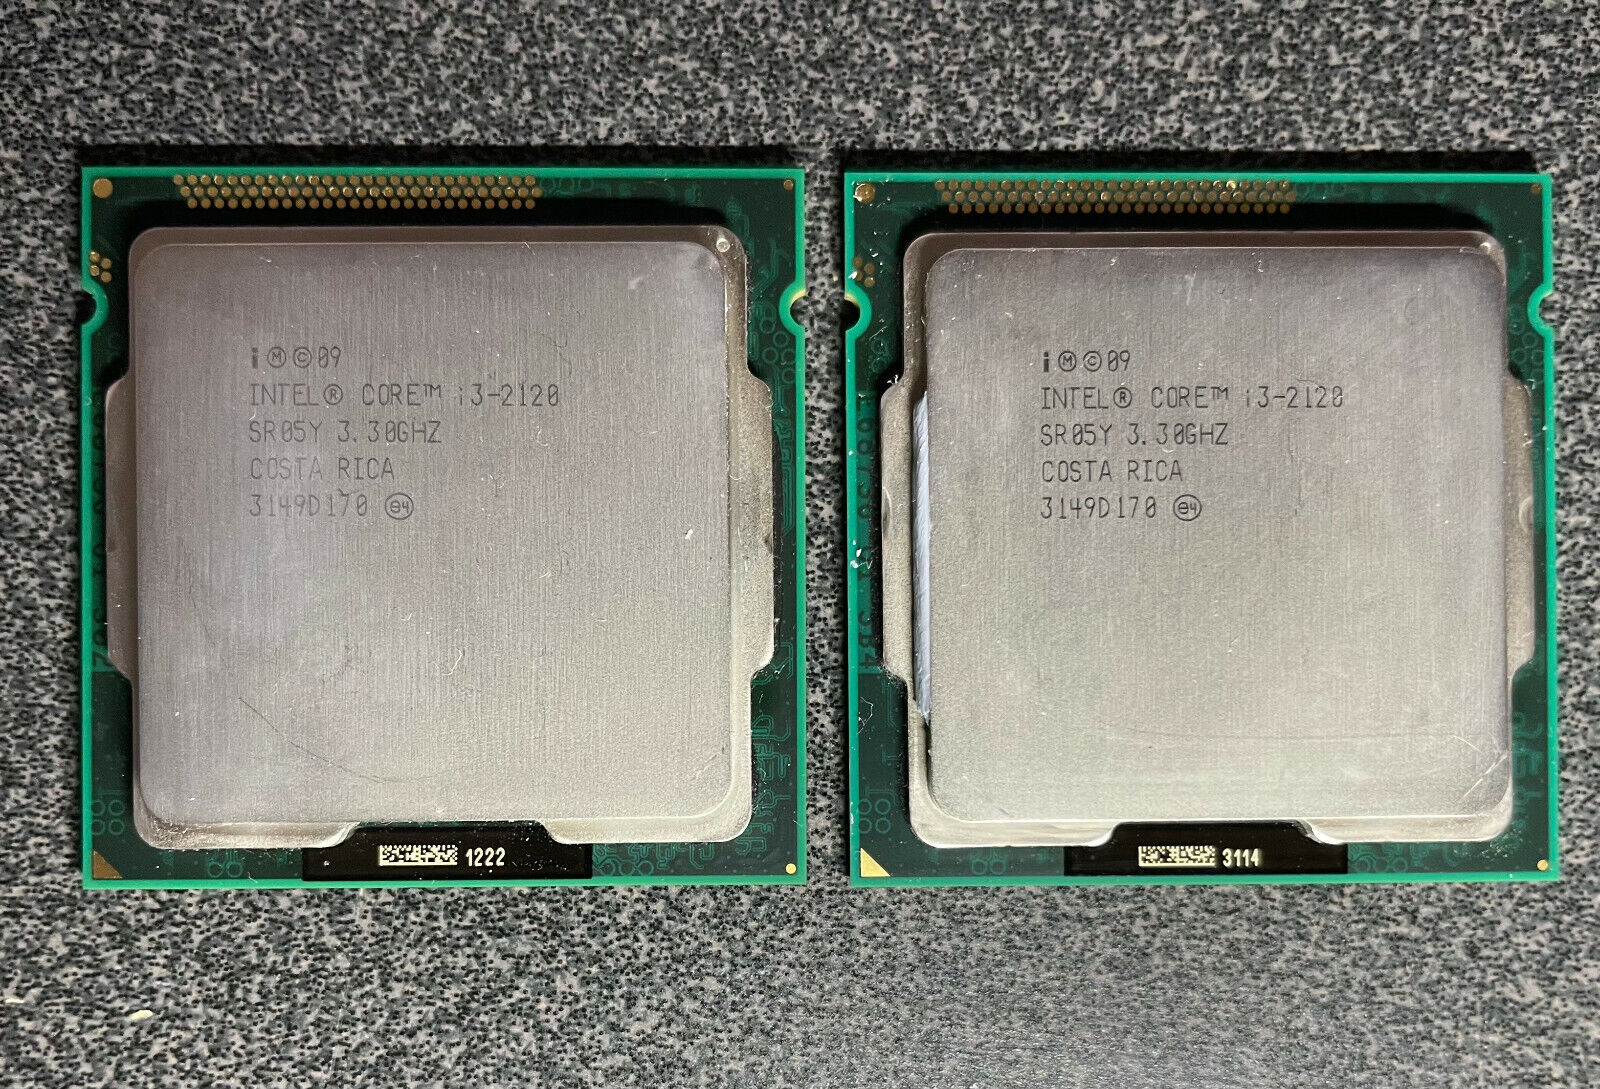 Lot of 2x Intel Core i3 2120 3.3GHz Dual Core CPU Processors SR05Y